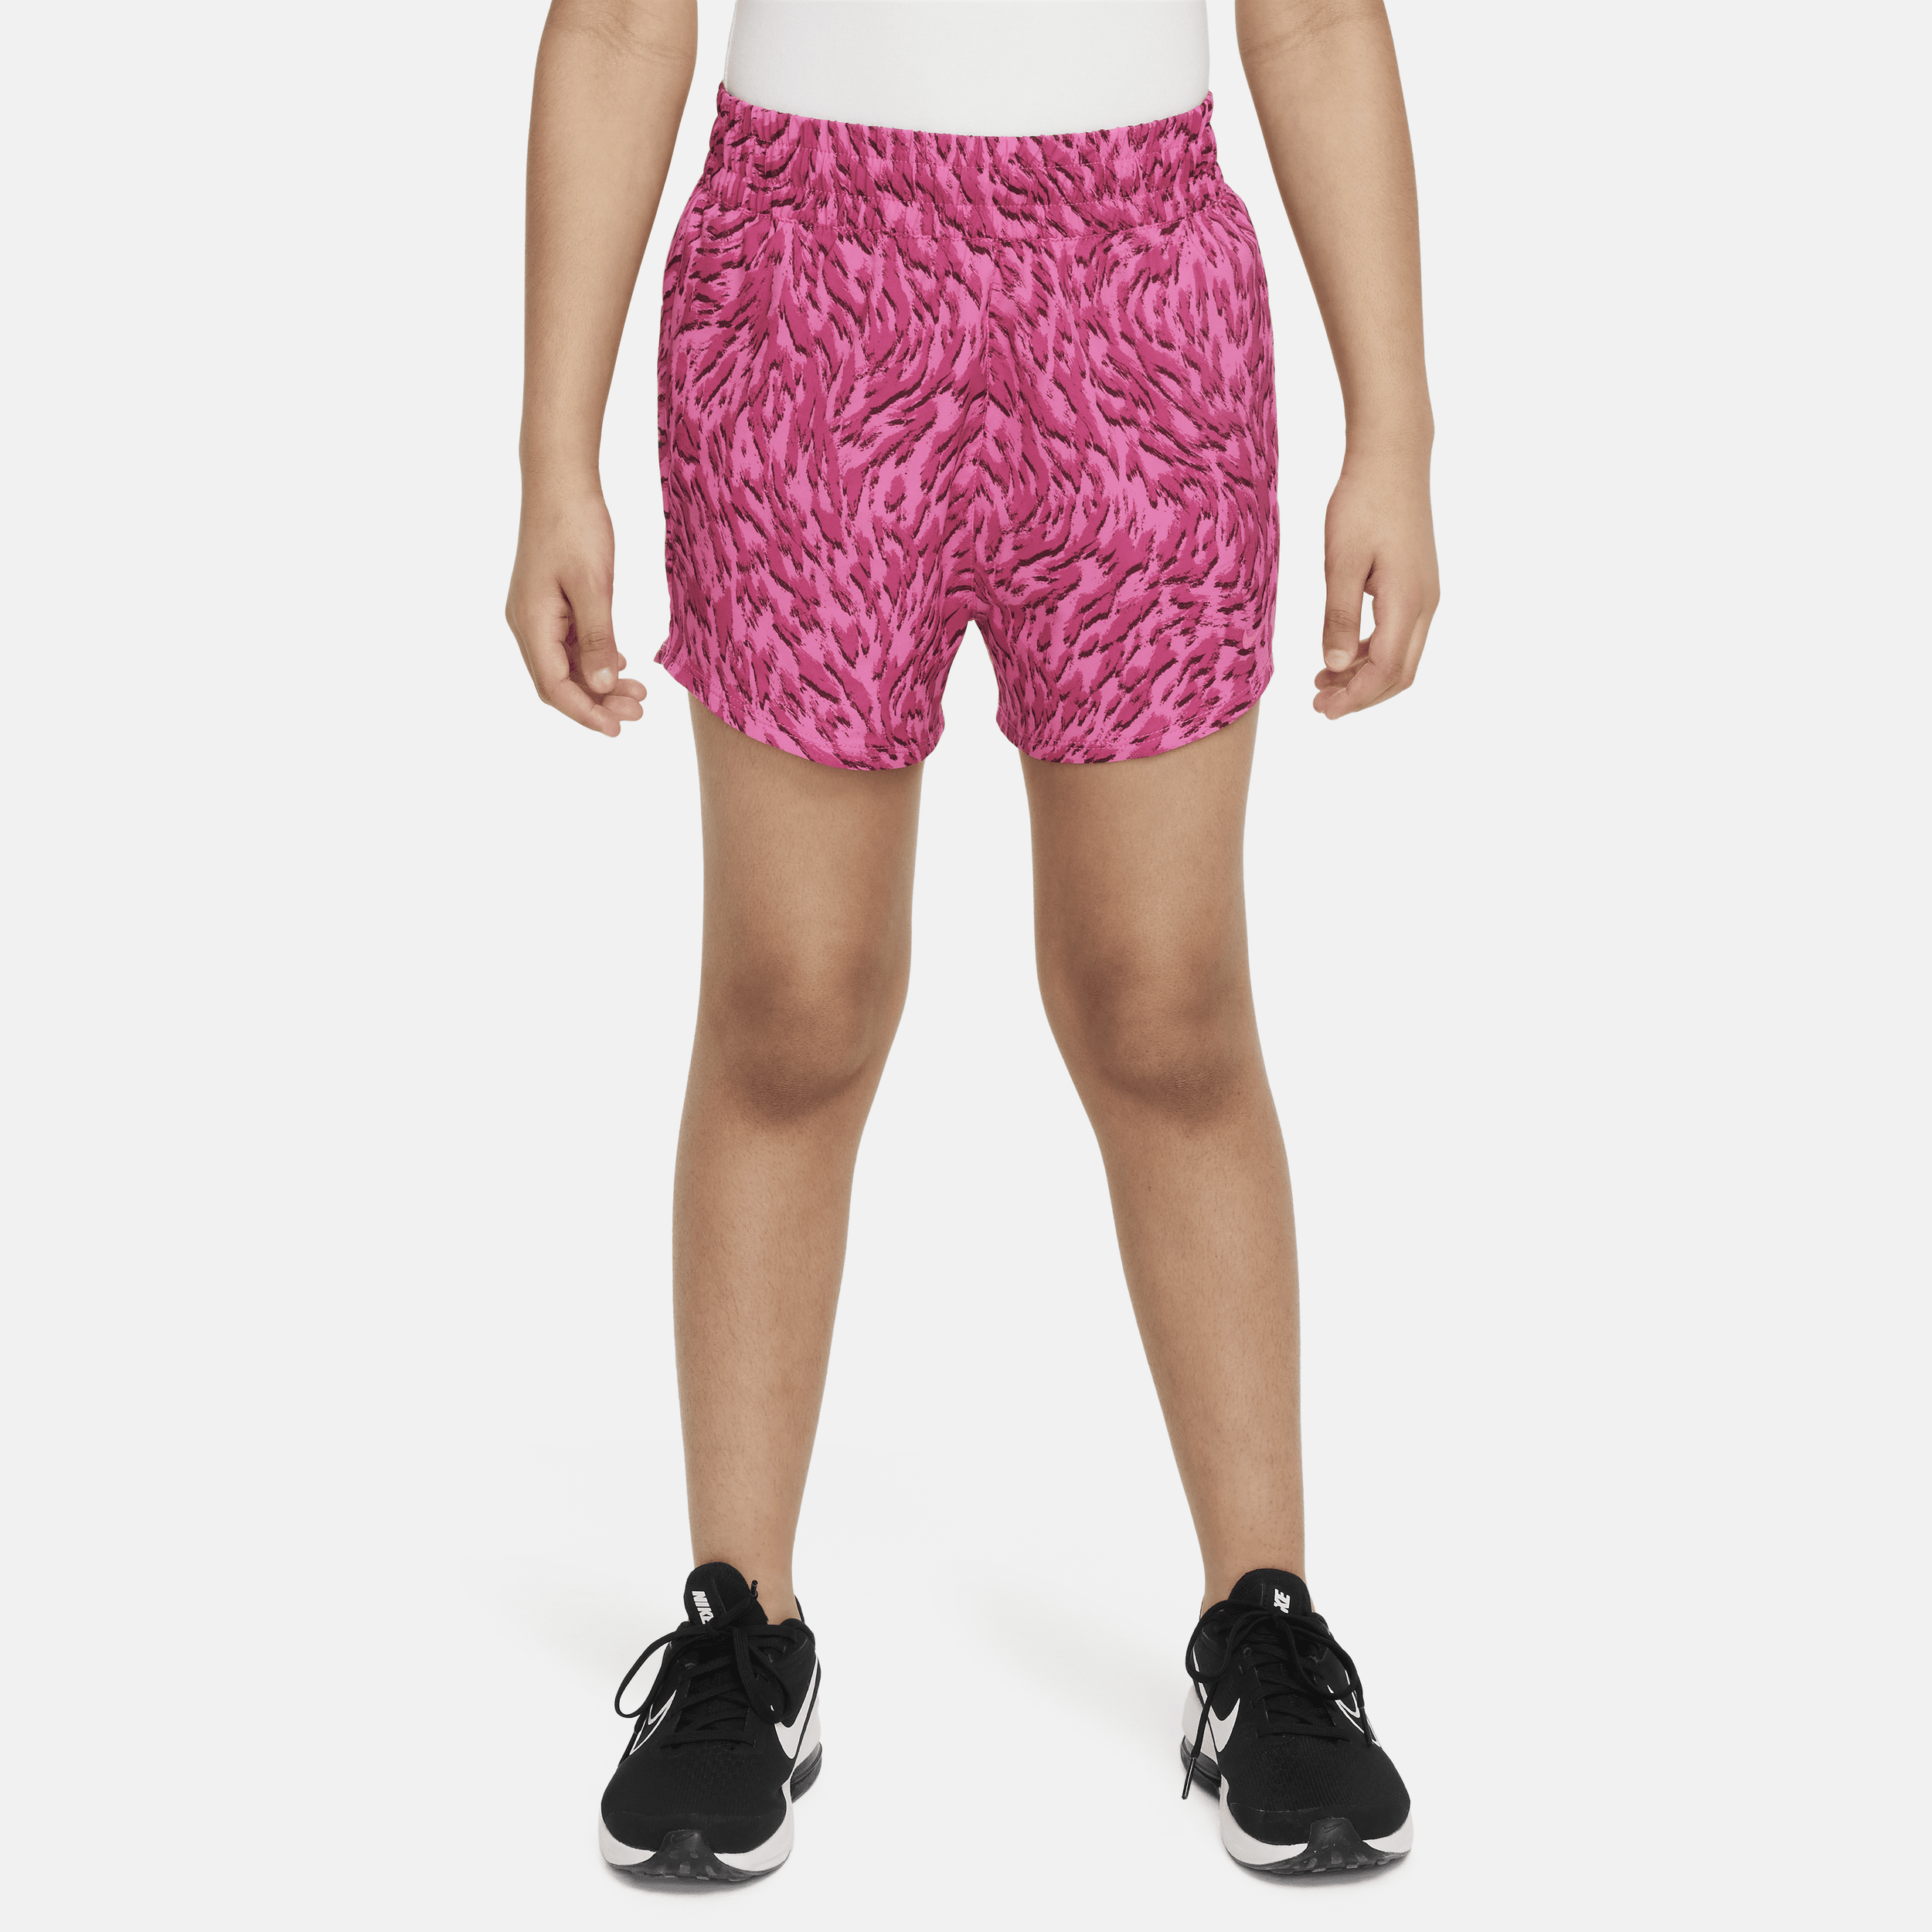 Nike One Pantalón corto de talle alto y tejido Woven - Niña - Rojo